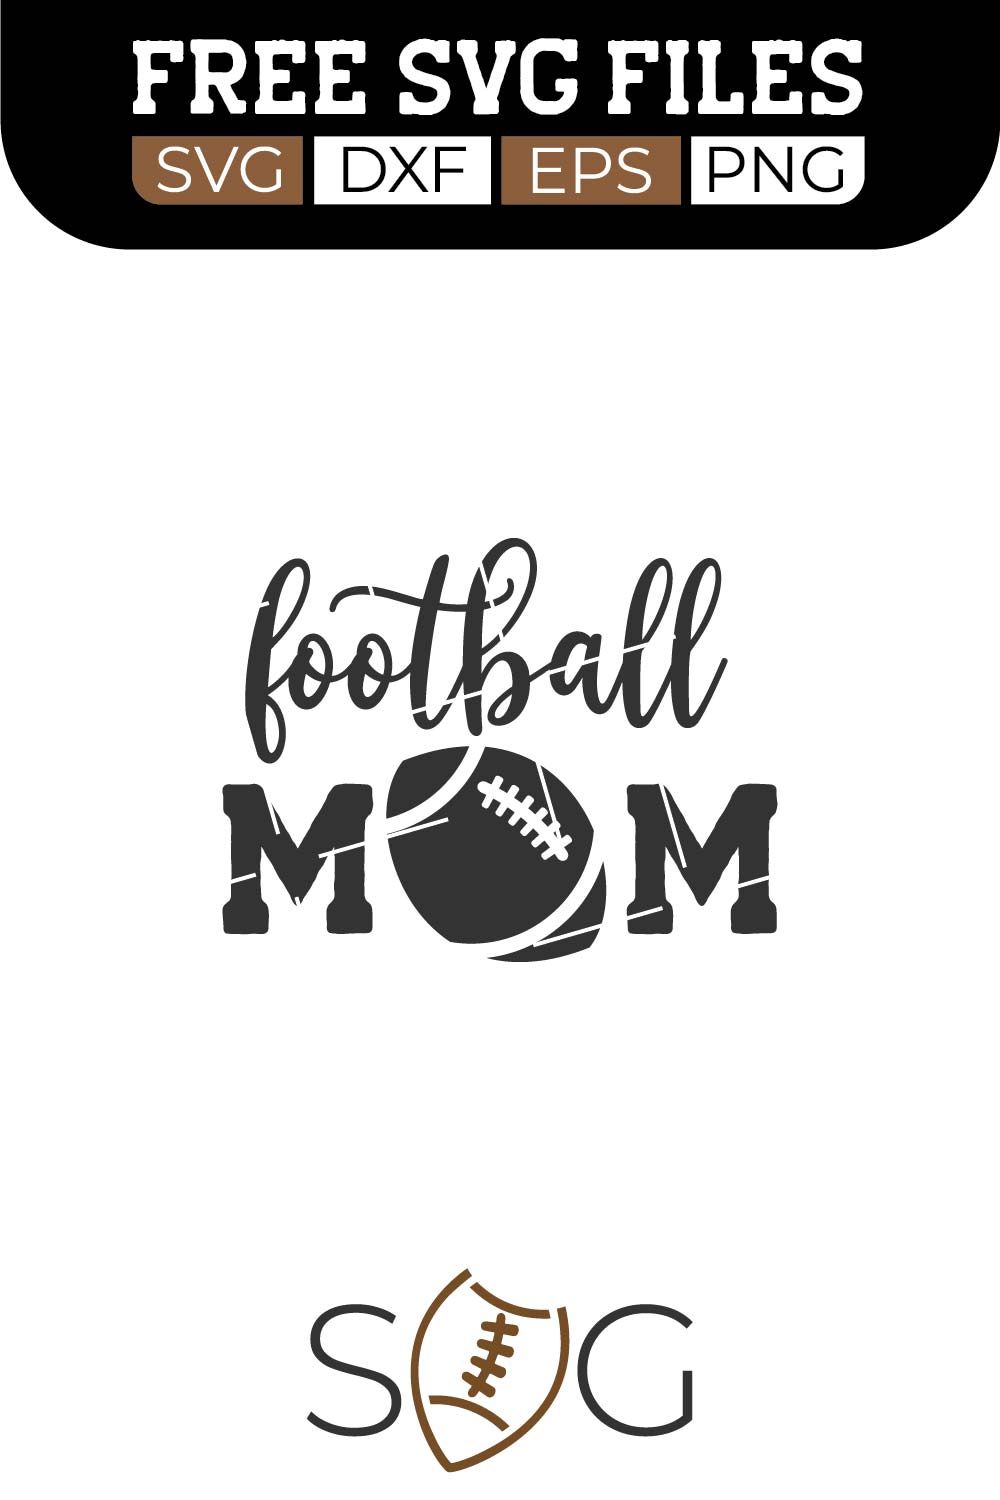 football, mom, football mom, football mom free, football mom svg free, football mom svg cut files free, download, cut file, nfl, print svg, digital prints, art svg, cut svg, vector, digital,